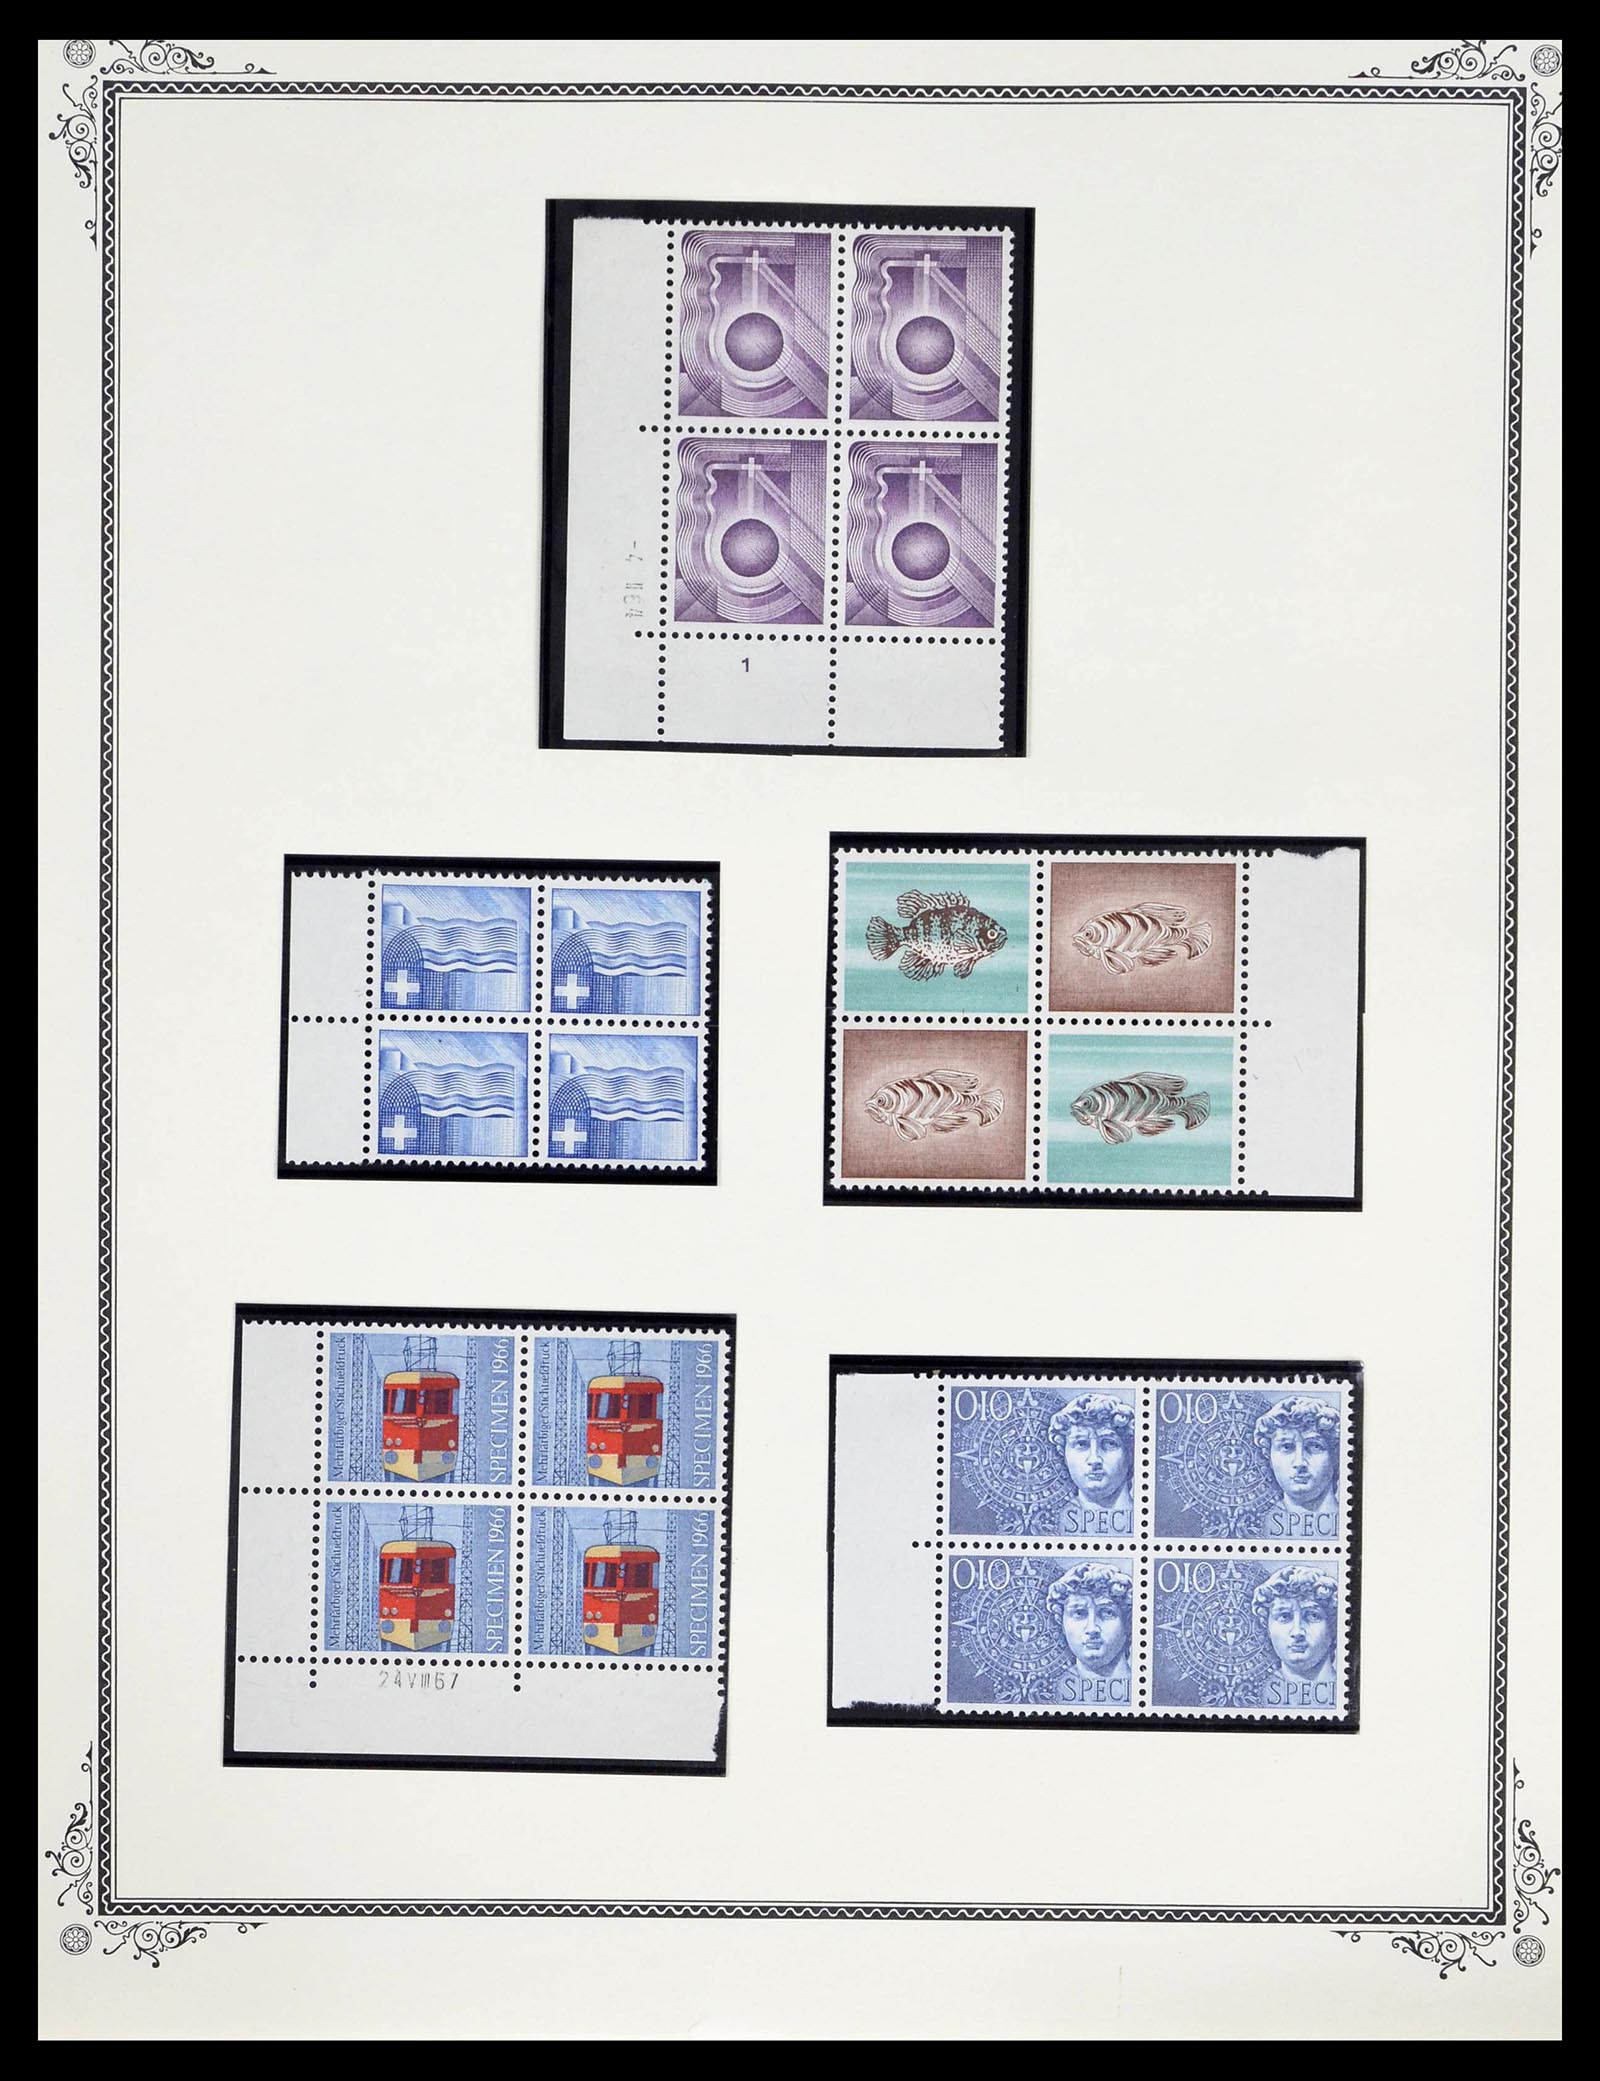 39178 0269 - Stamp collection 39178 Switzerland 1850-1989.